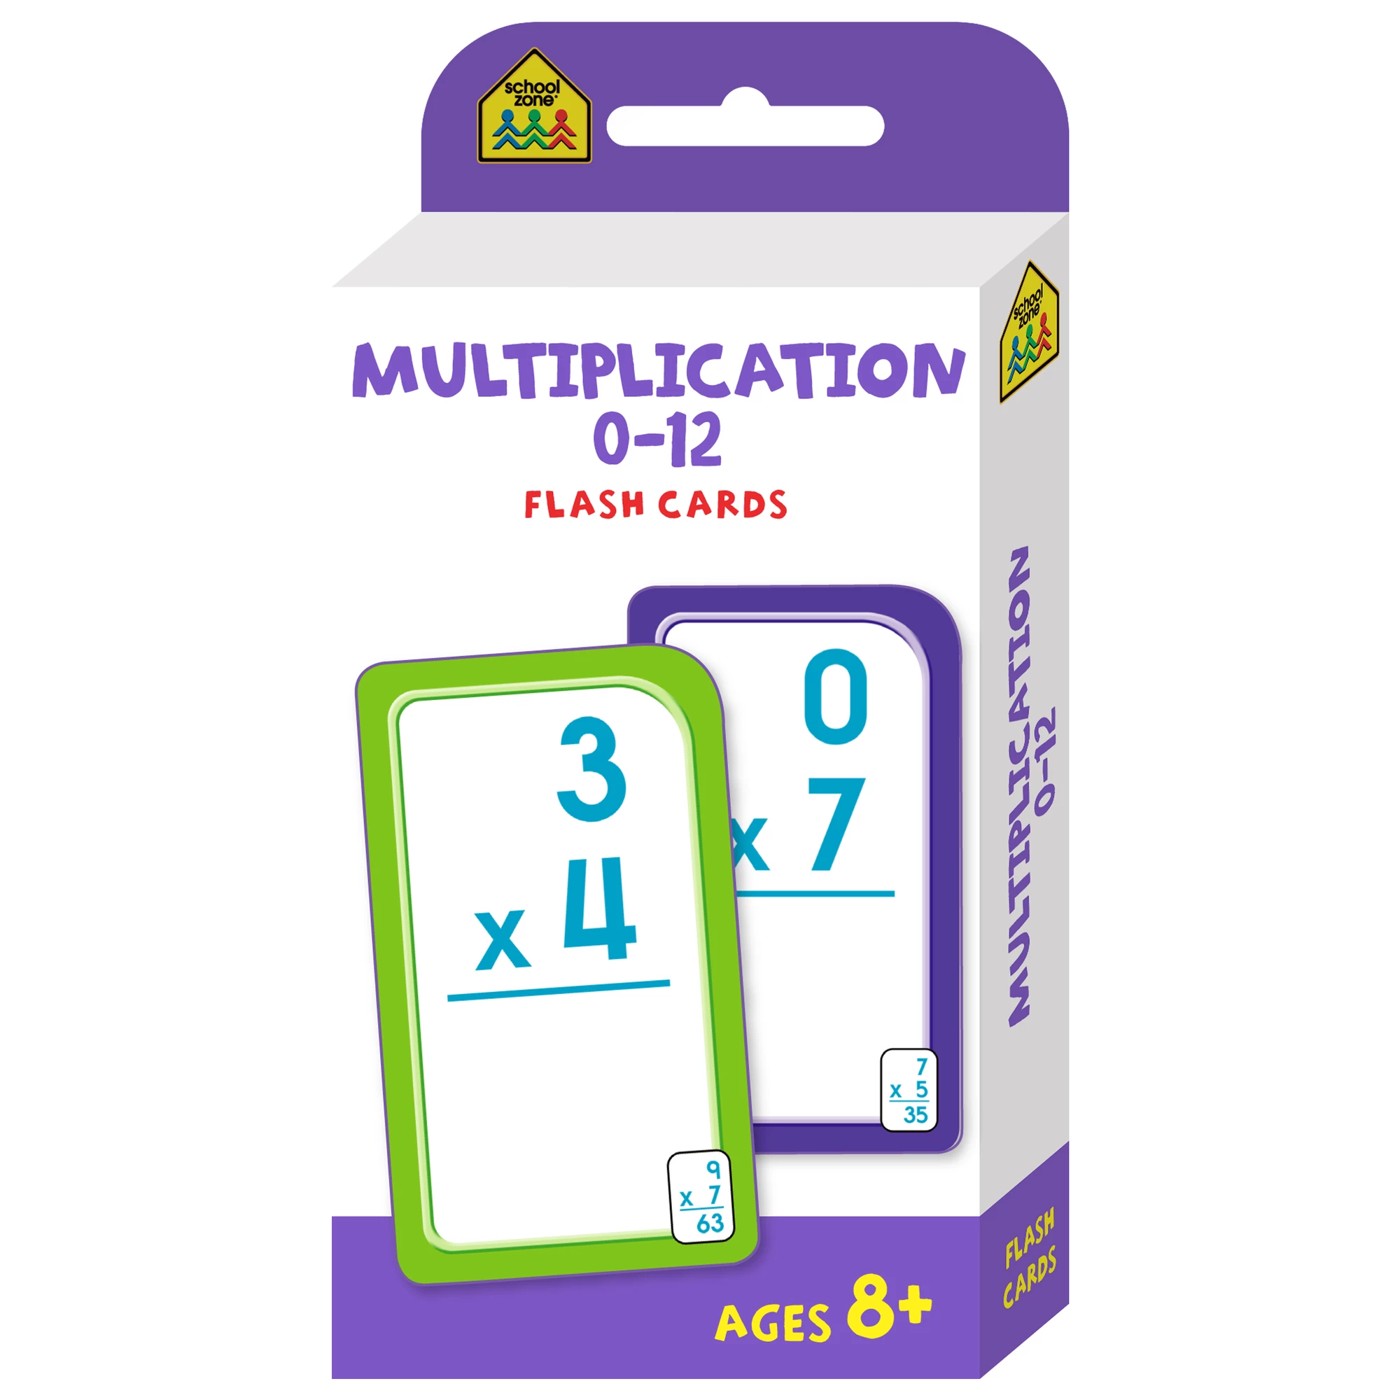 Multiplication 0-12 Flash Cards | Target Australia